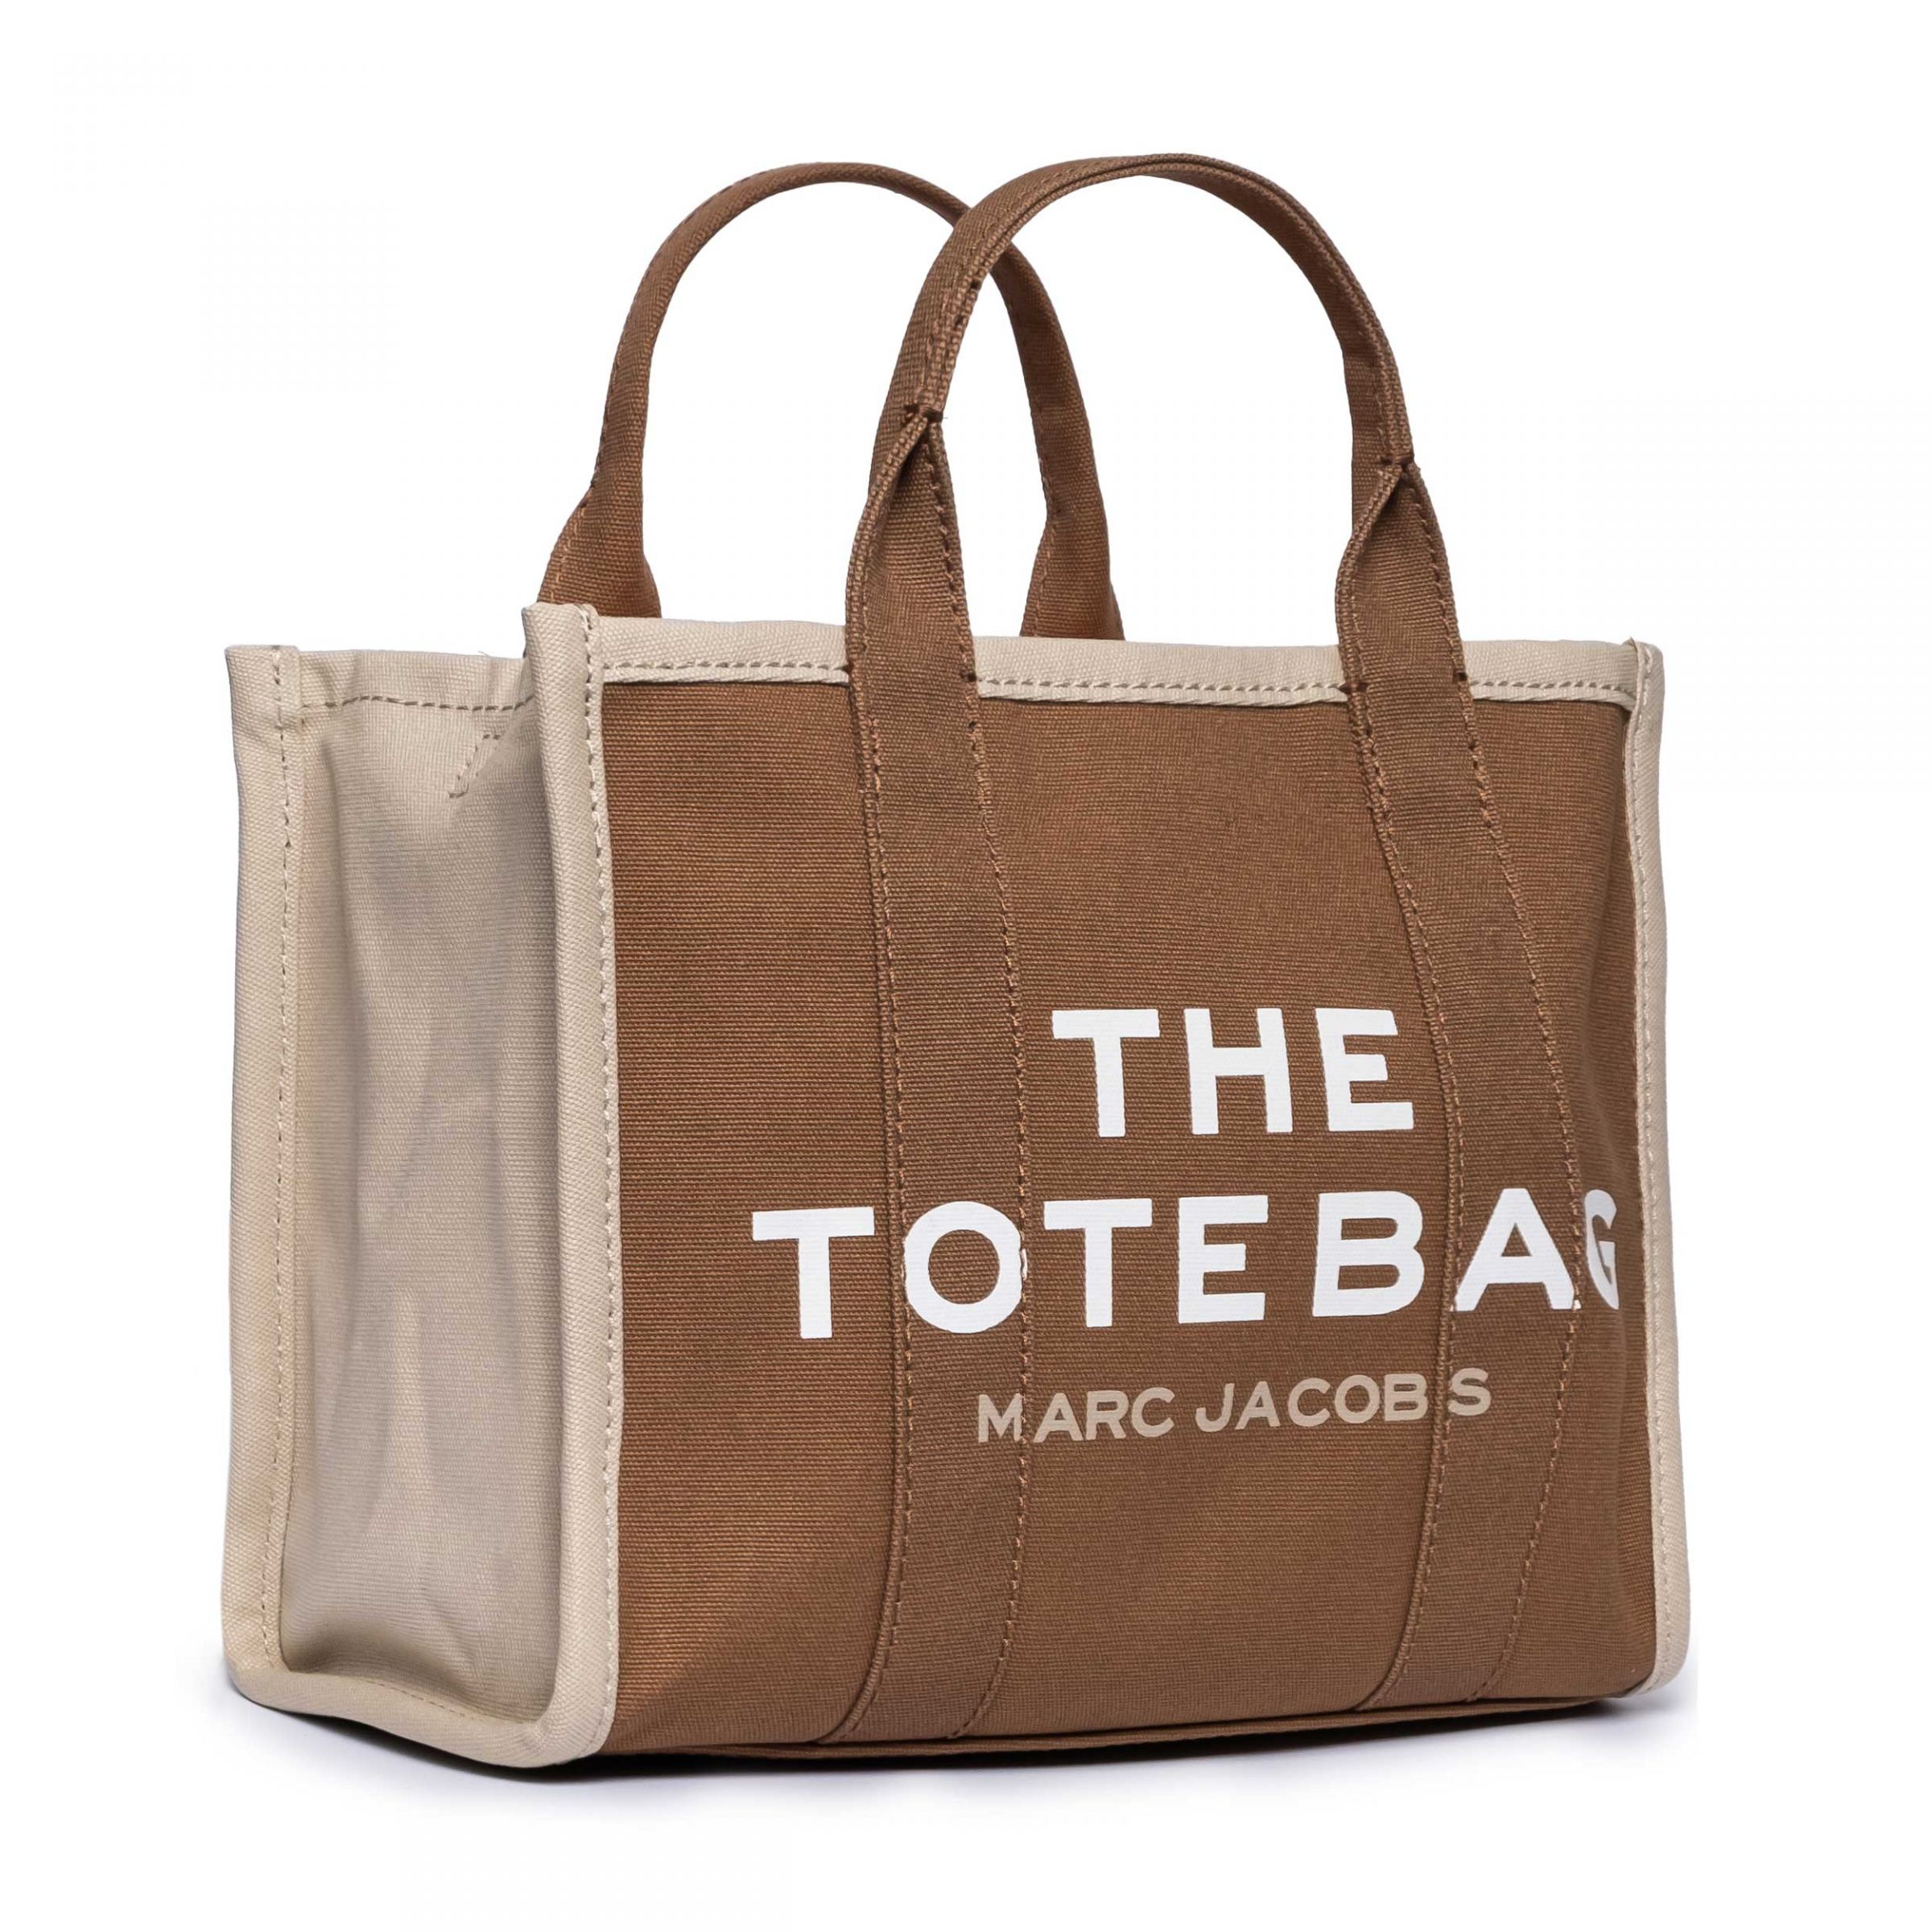 Сумка Marc Jacobs The Tote Bag коричневая